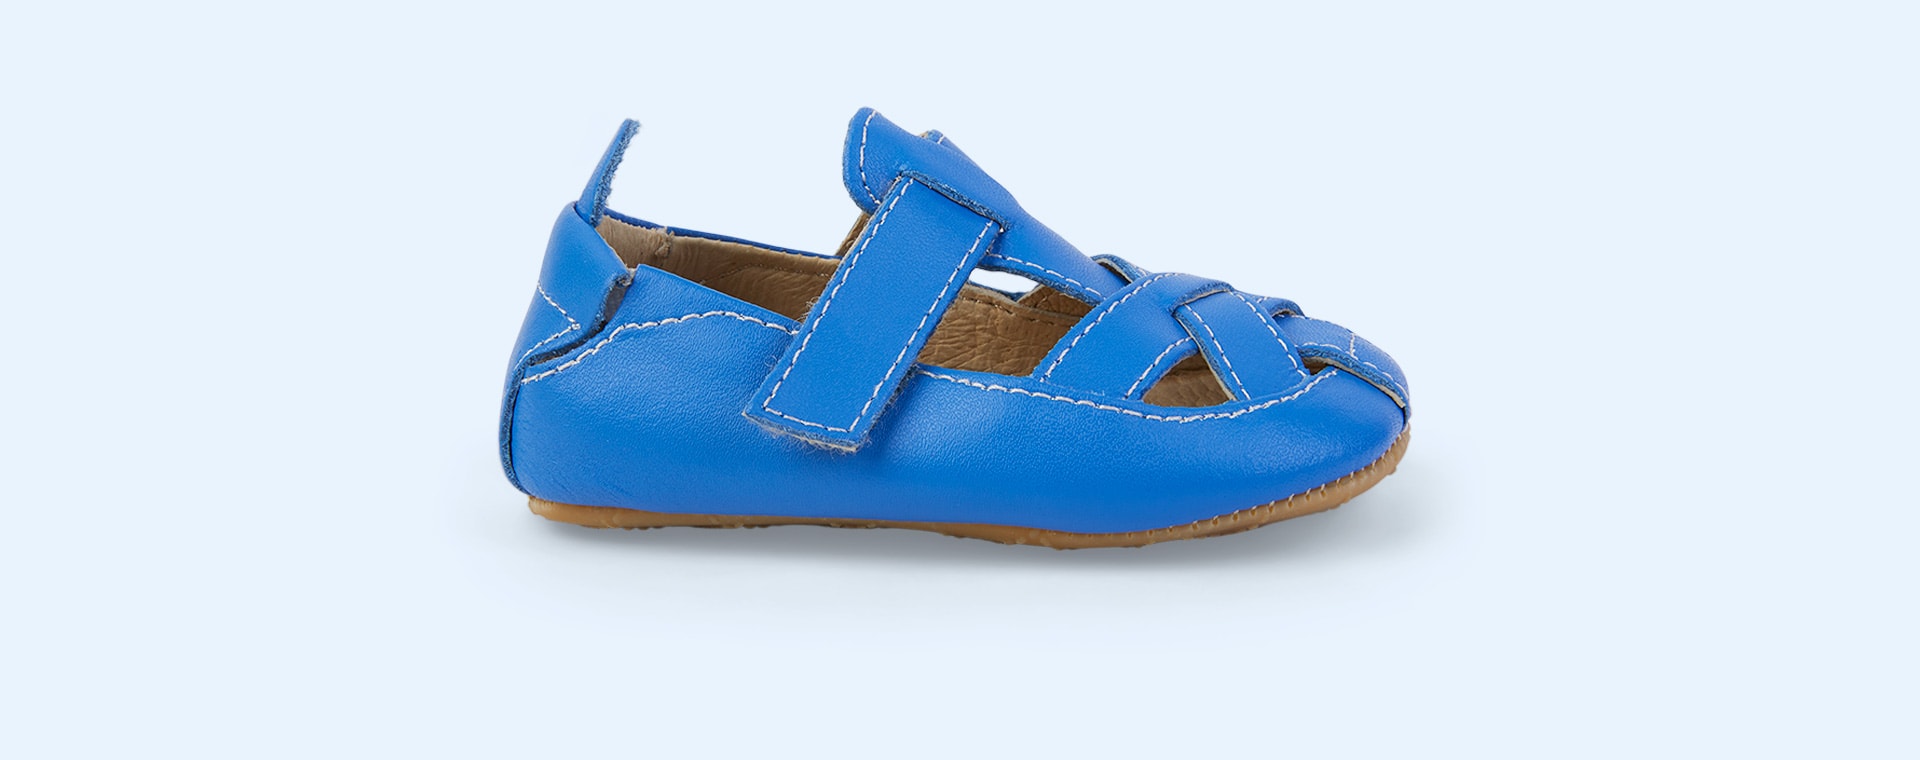 Neon Blue old soles Thread Shoe